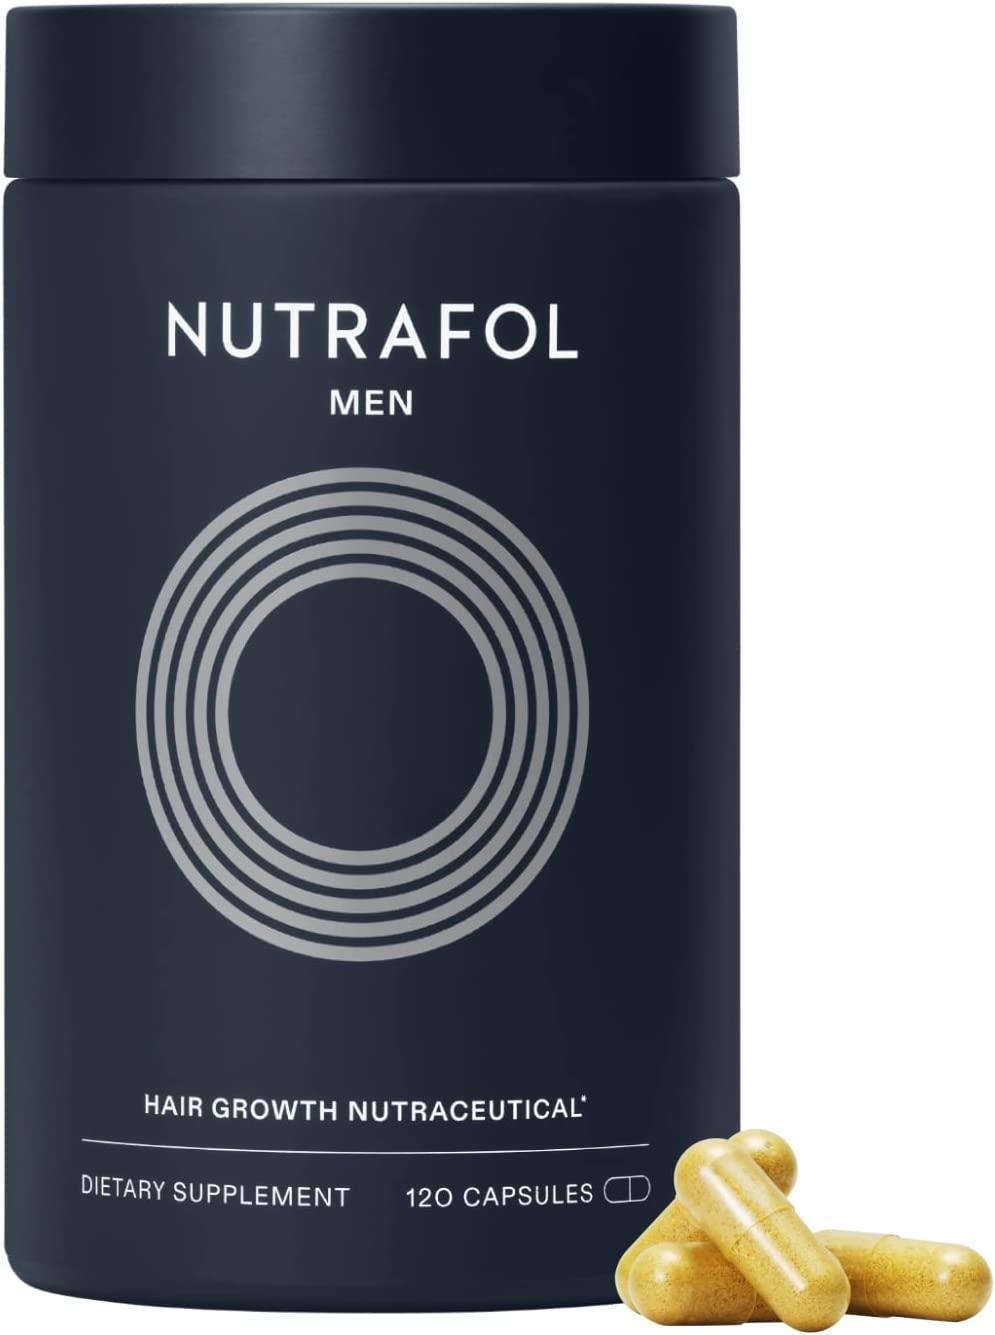 Nutrafol men's hair growth supplements